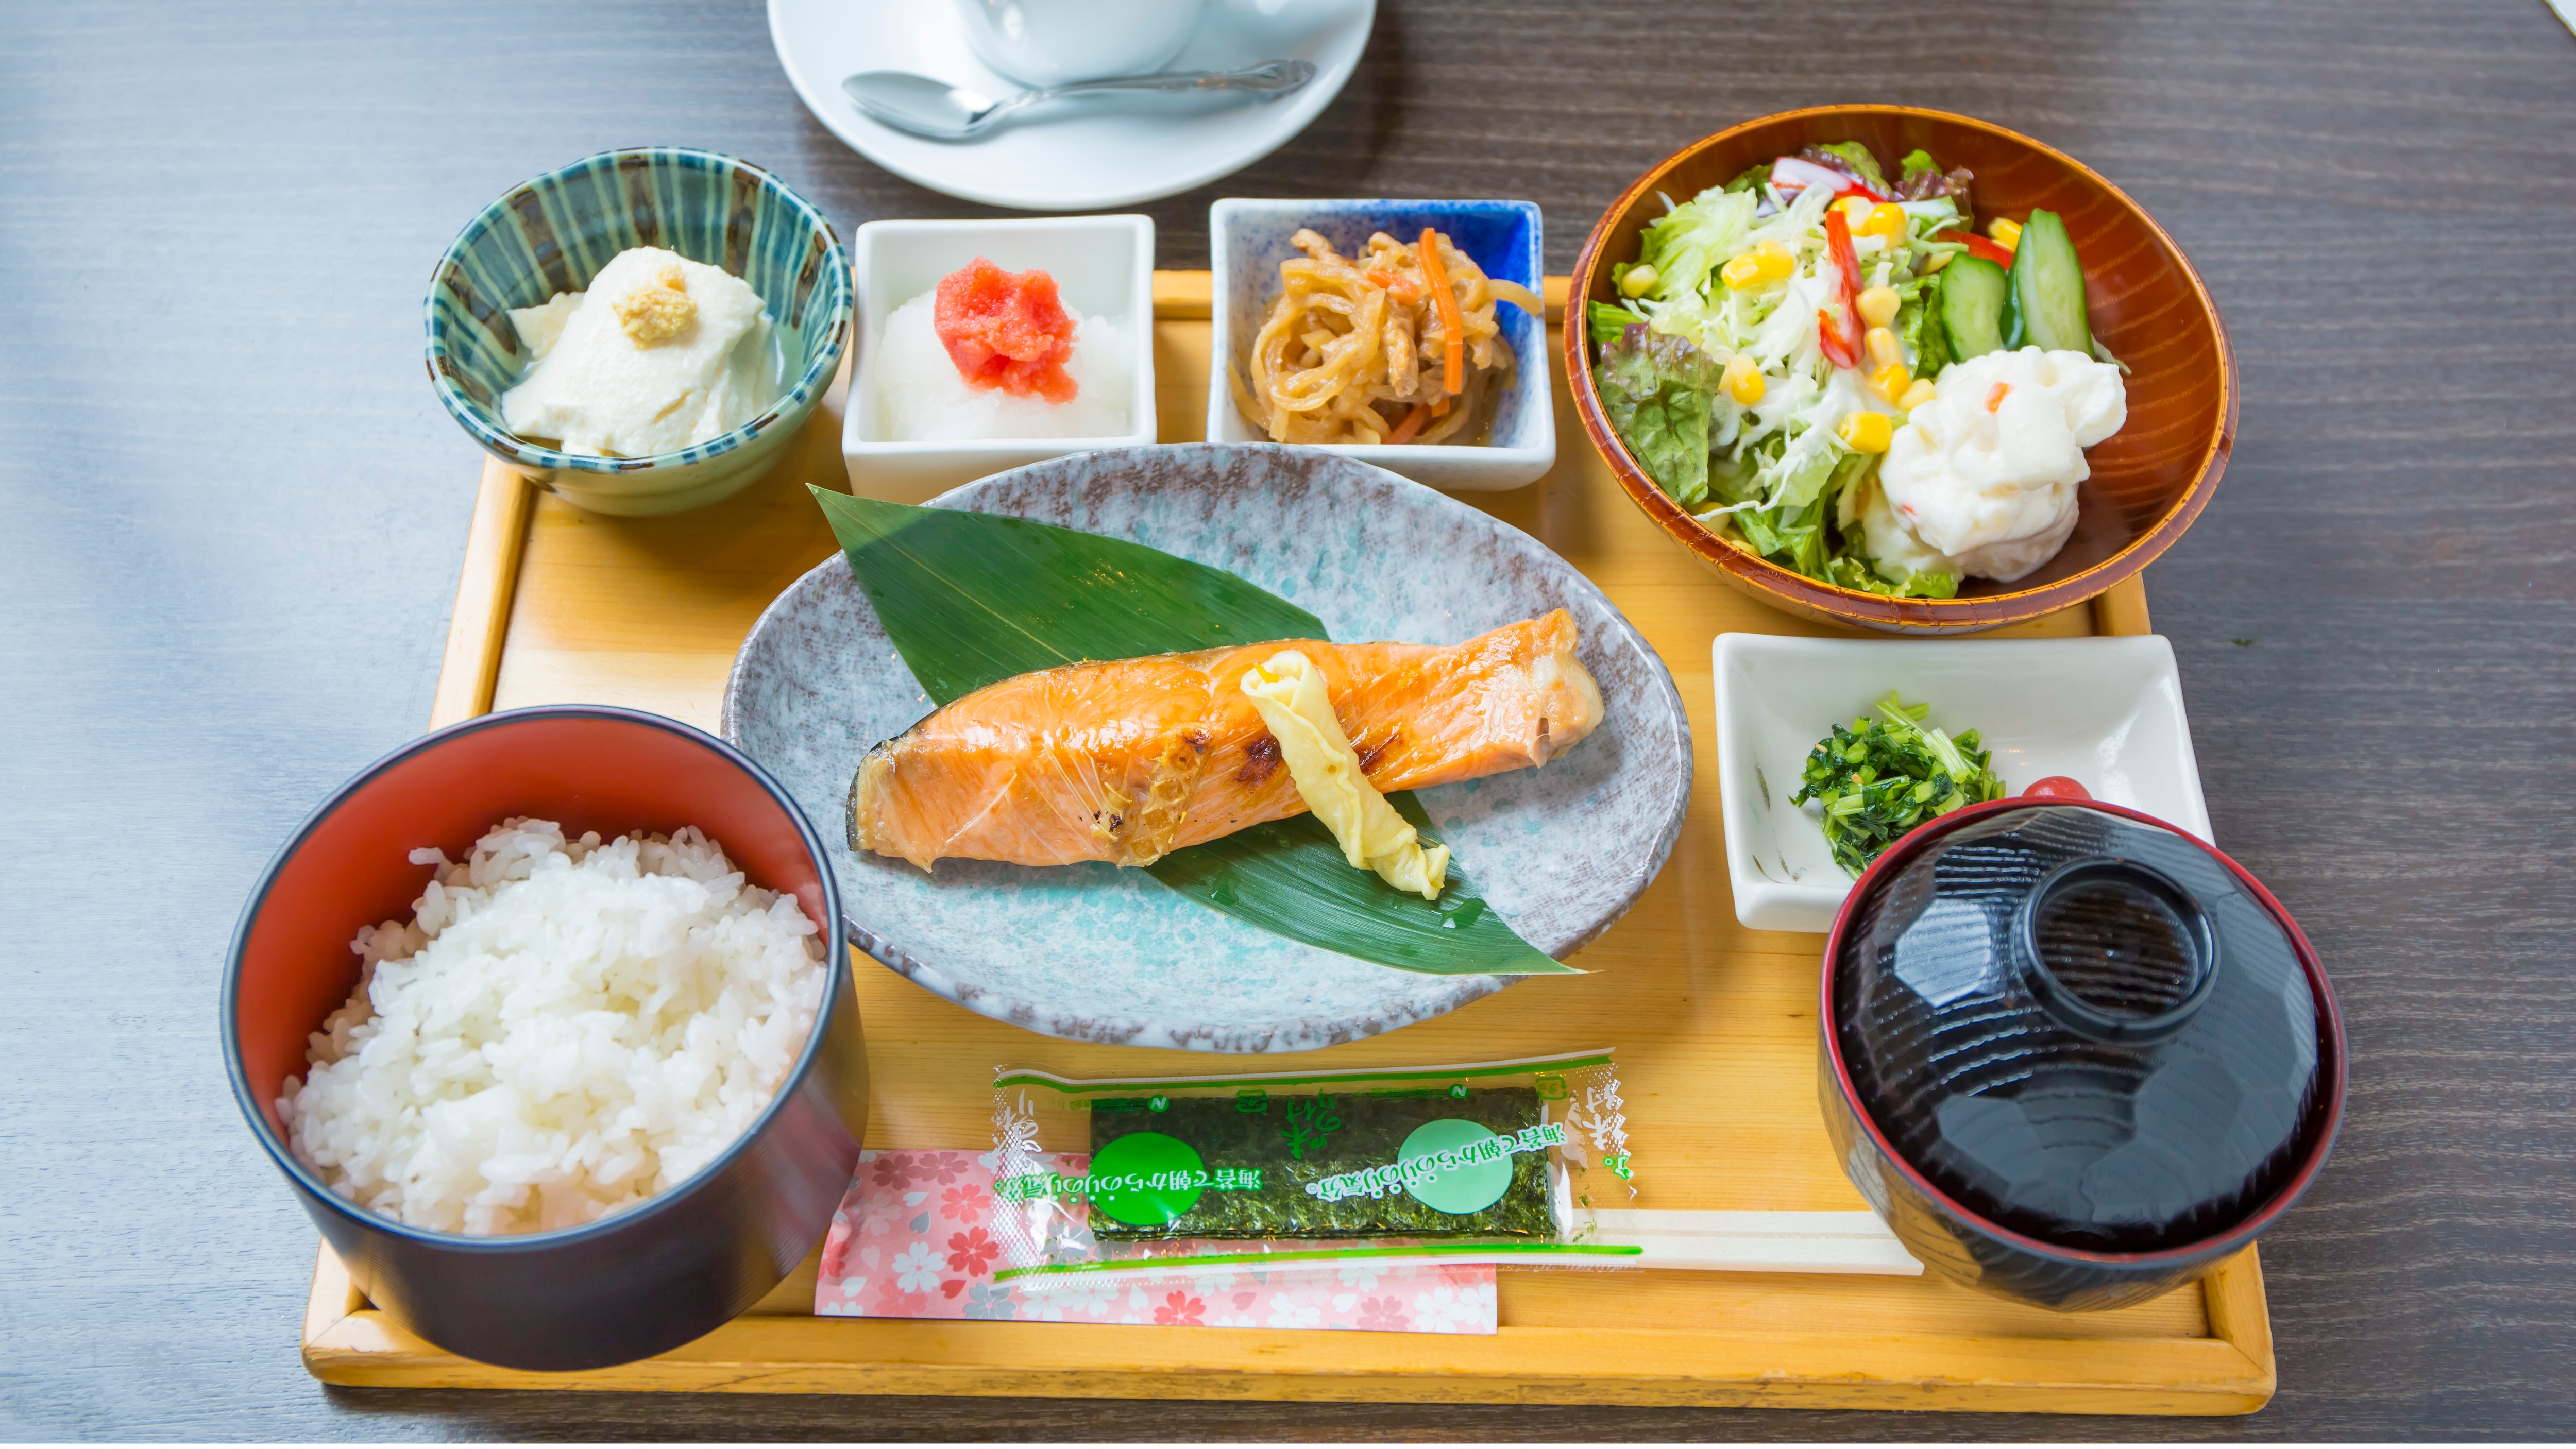 Sarapan "Makanan set Jepang" Dari pukul 7 pagi hingga 10 pagi, Anda dapat menikmatinya di restoran "Nanao" seharga 970 yen.